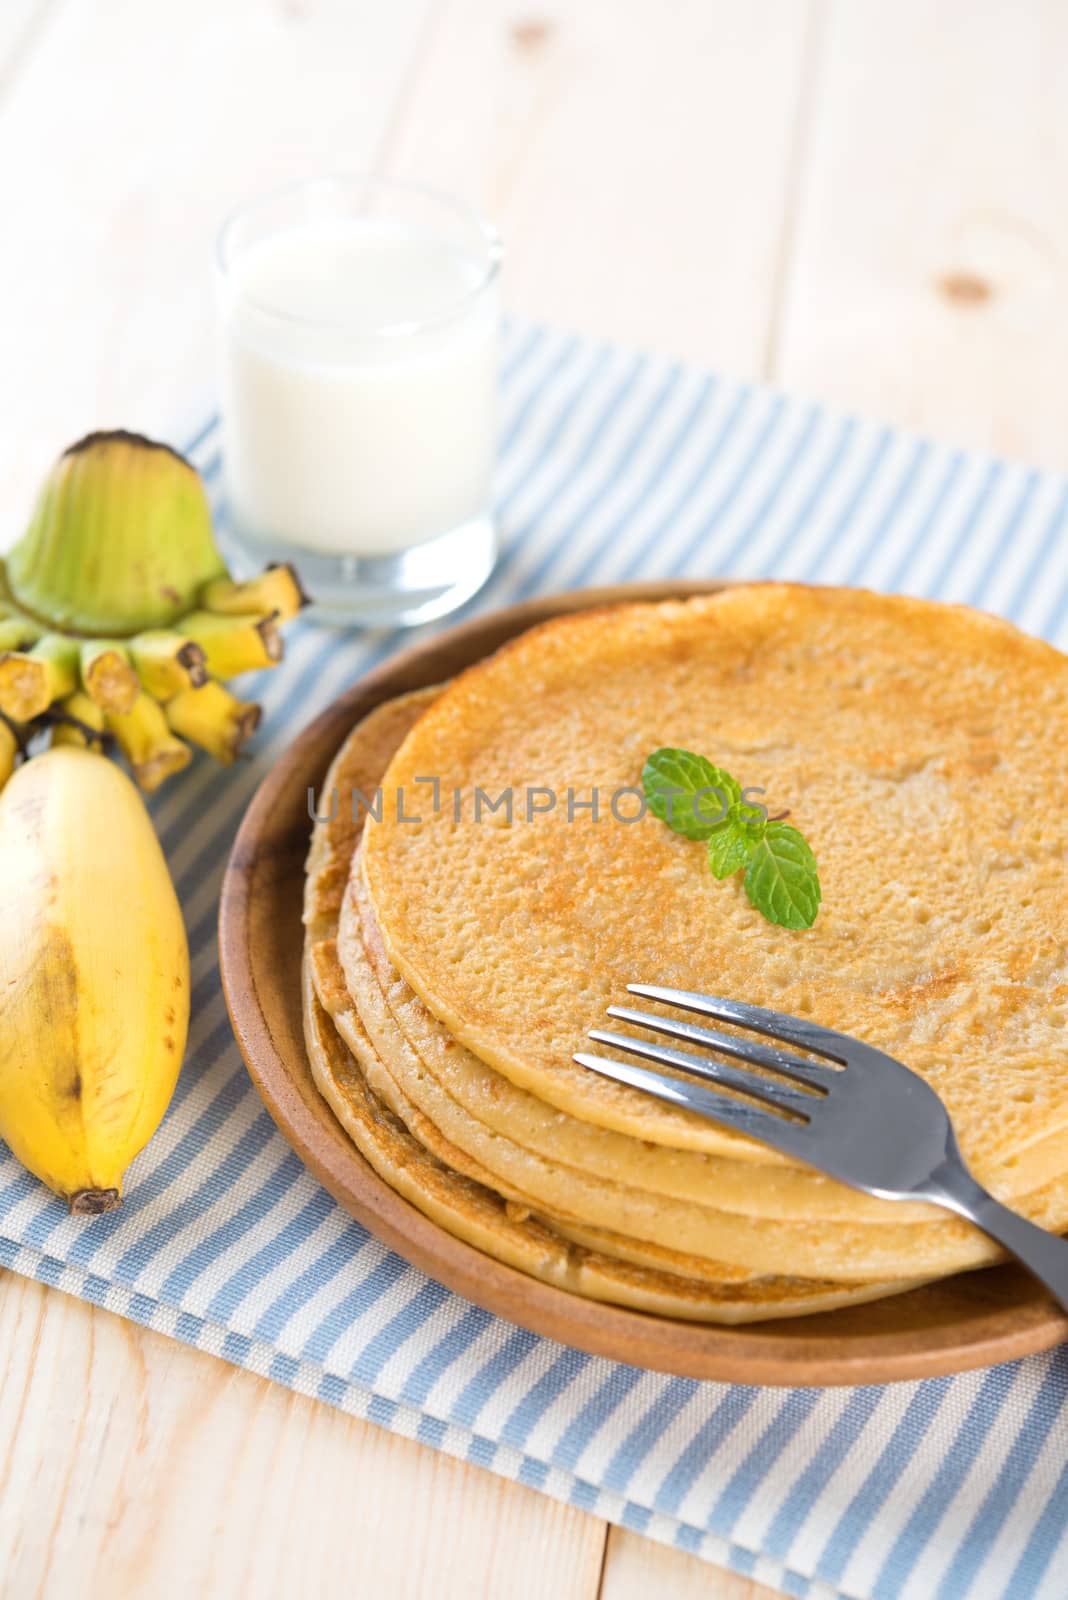 Homemade banana pancakes or crepe on dining table.